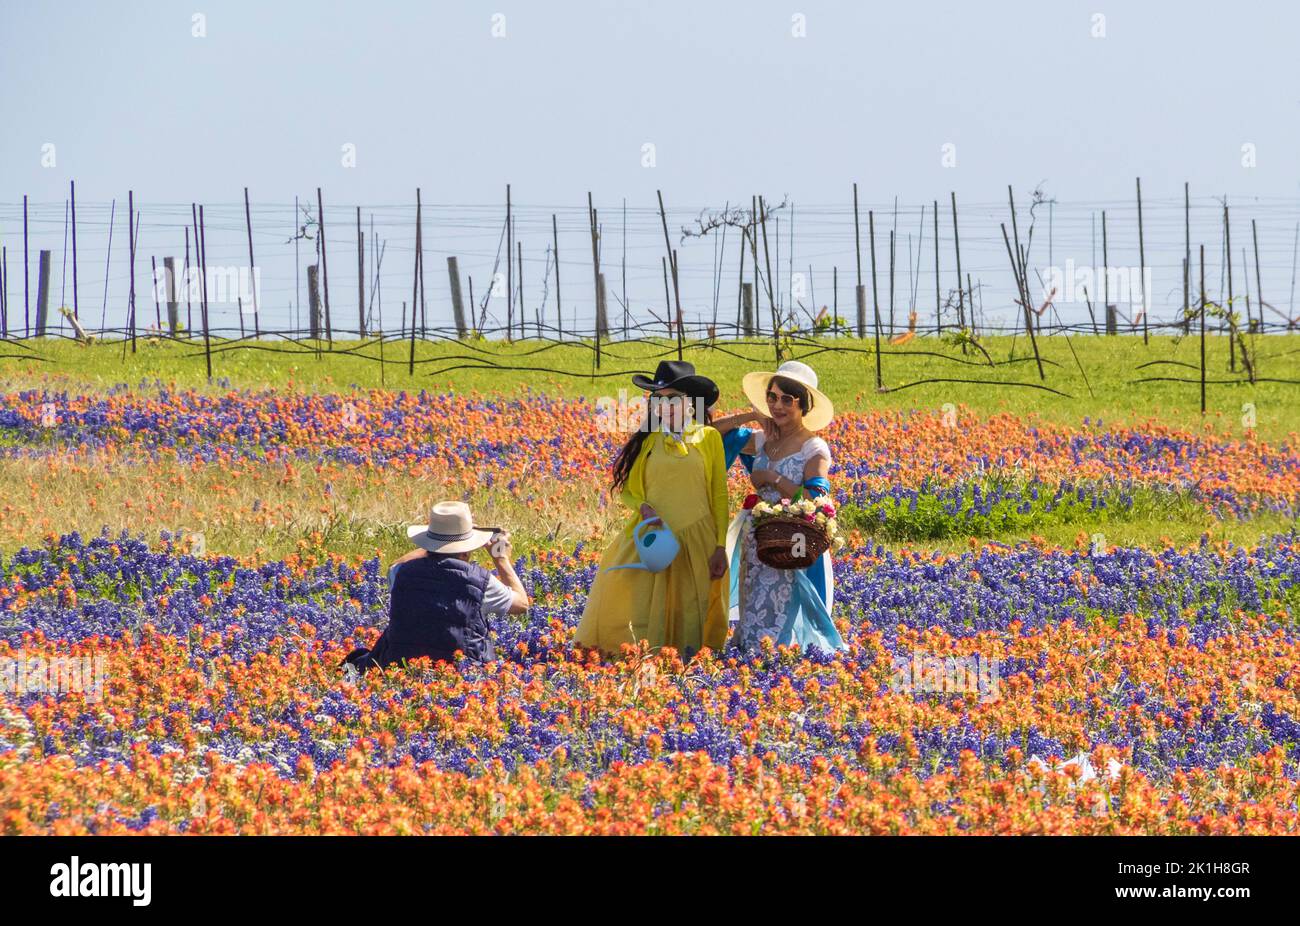 Turistas, fotógrafos y campos de flores silvestres de Texas en abril cerca de Whitehall, Texas. Foto de stock